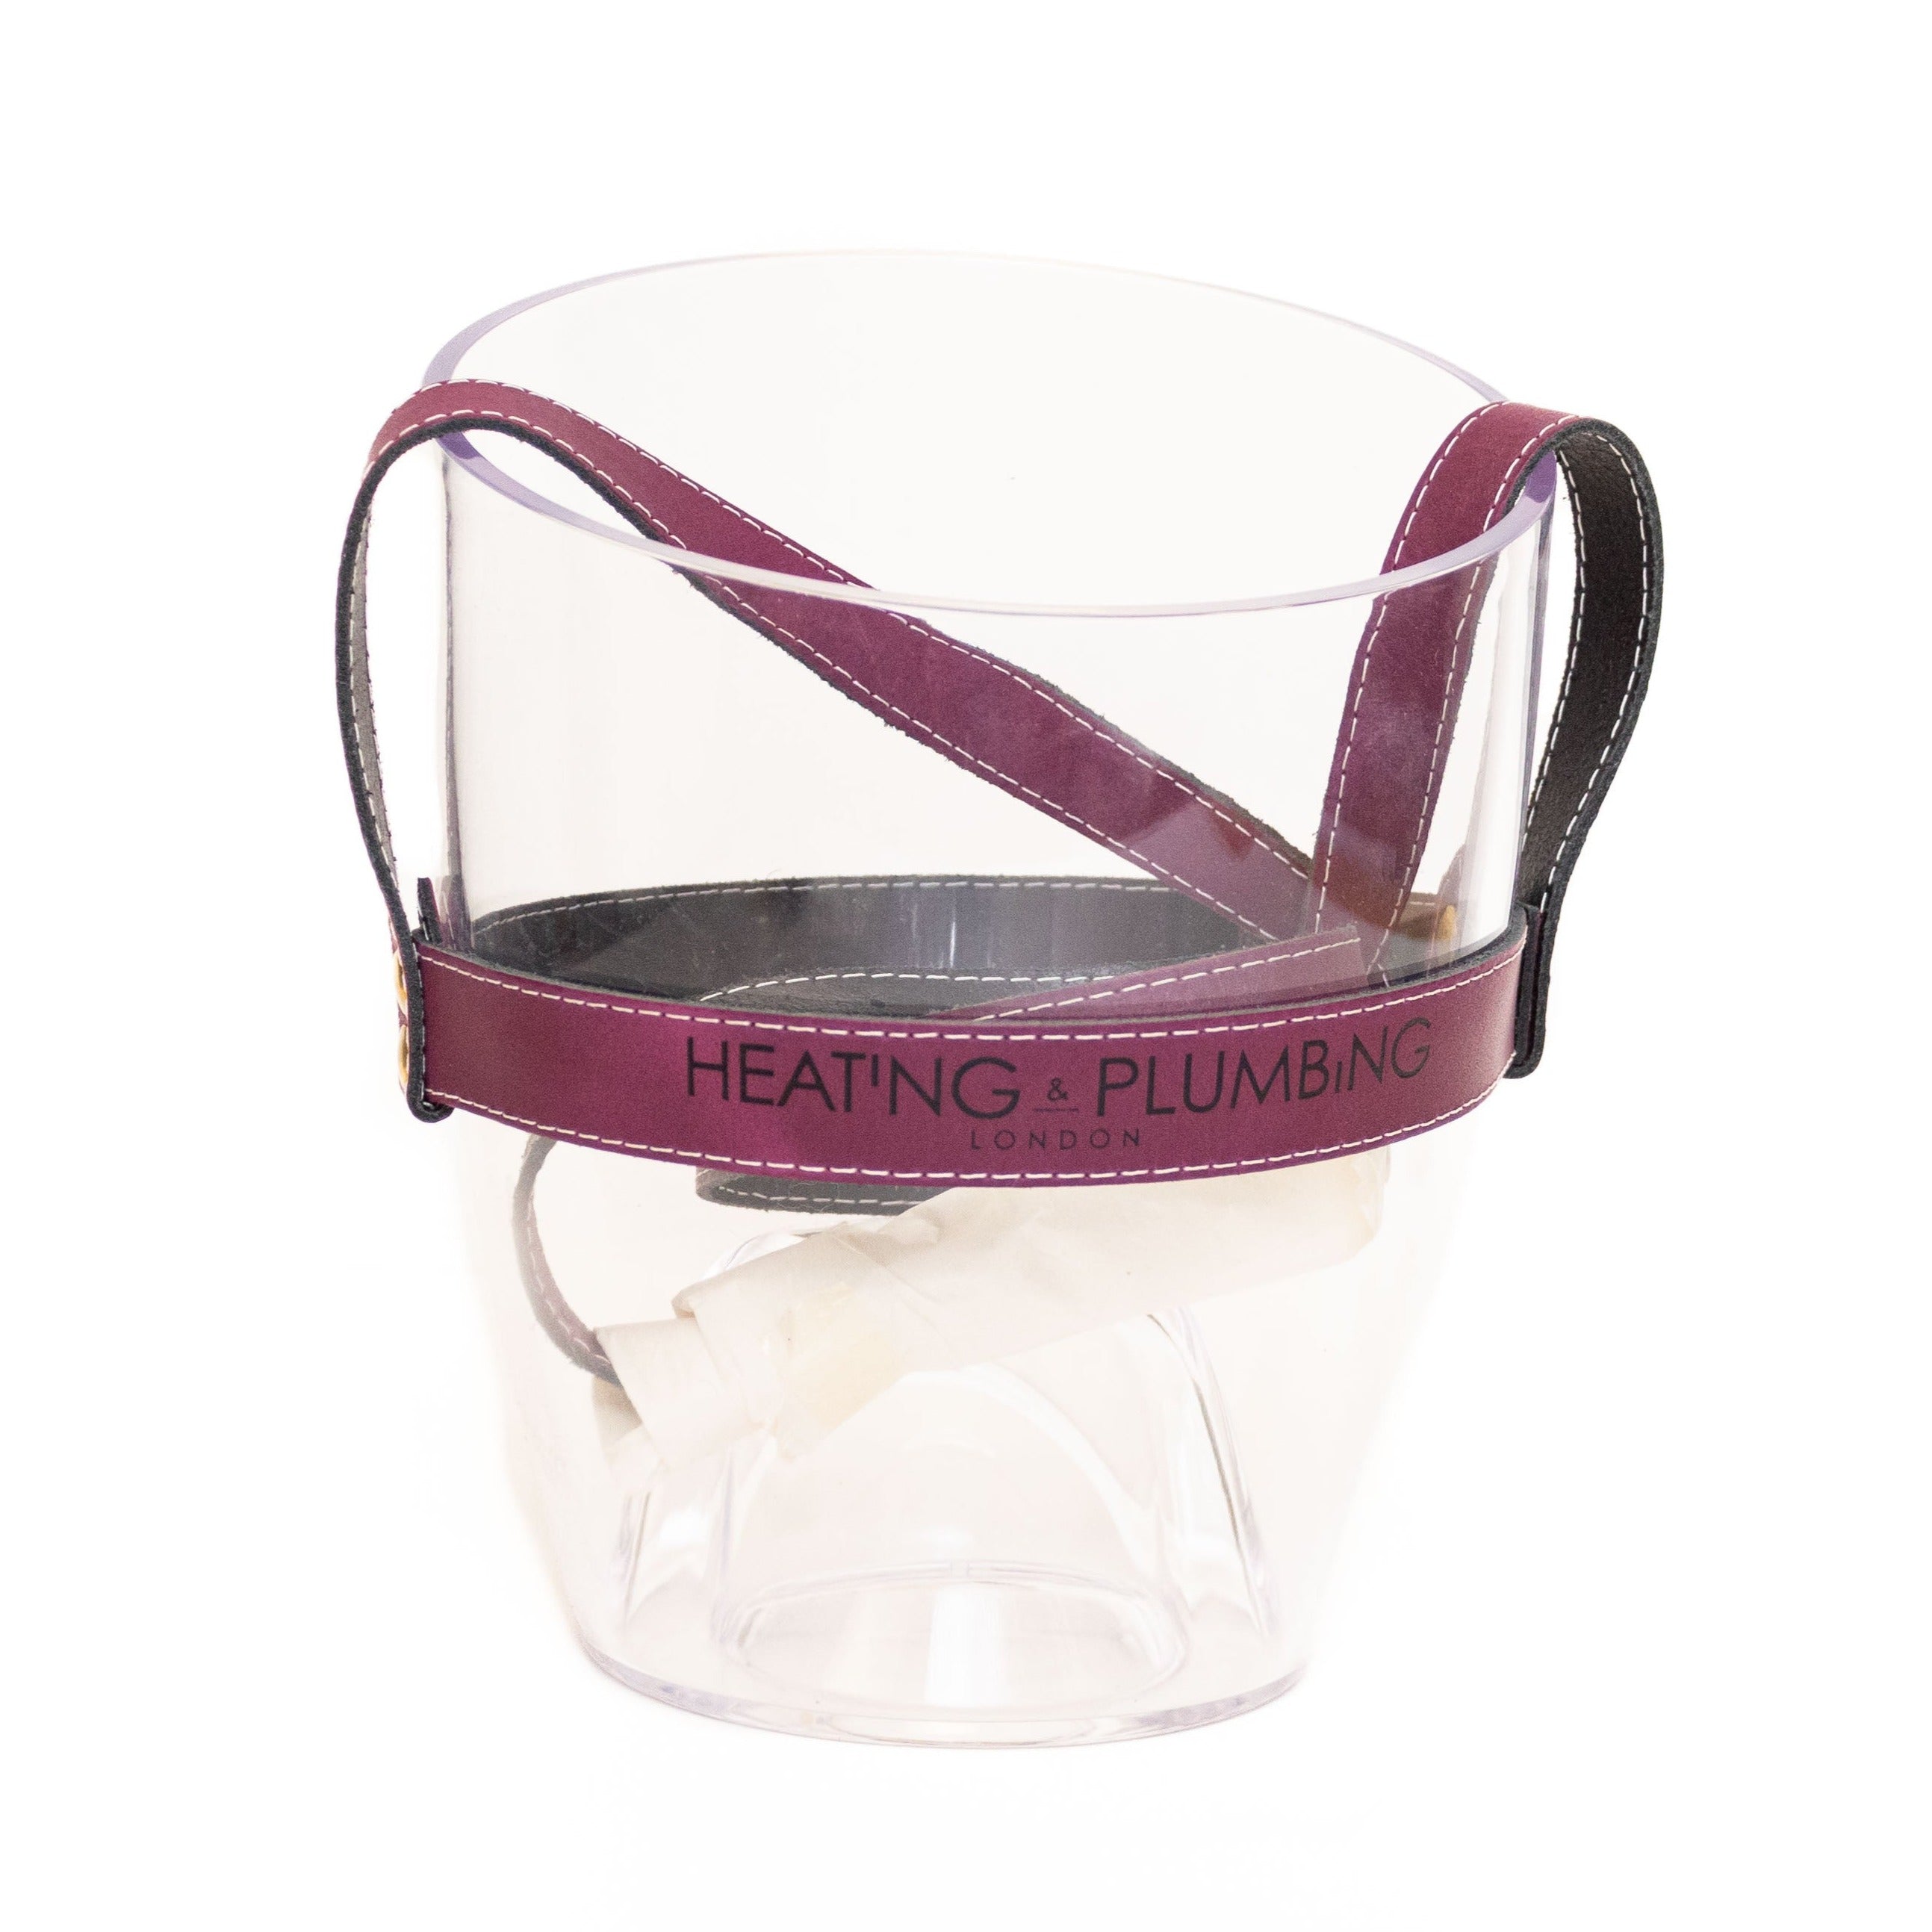 London Heating and Plumbing Champagne Bucket Purple - Decree Co. 